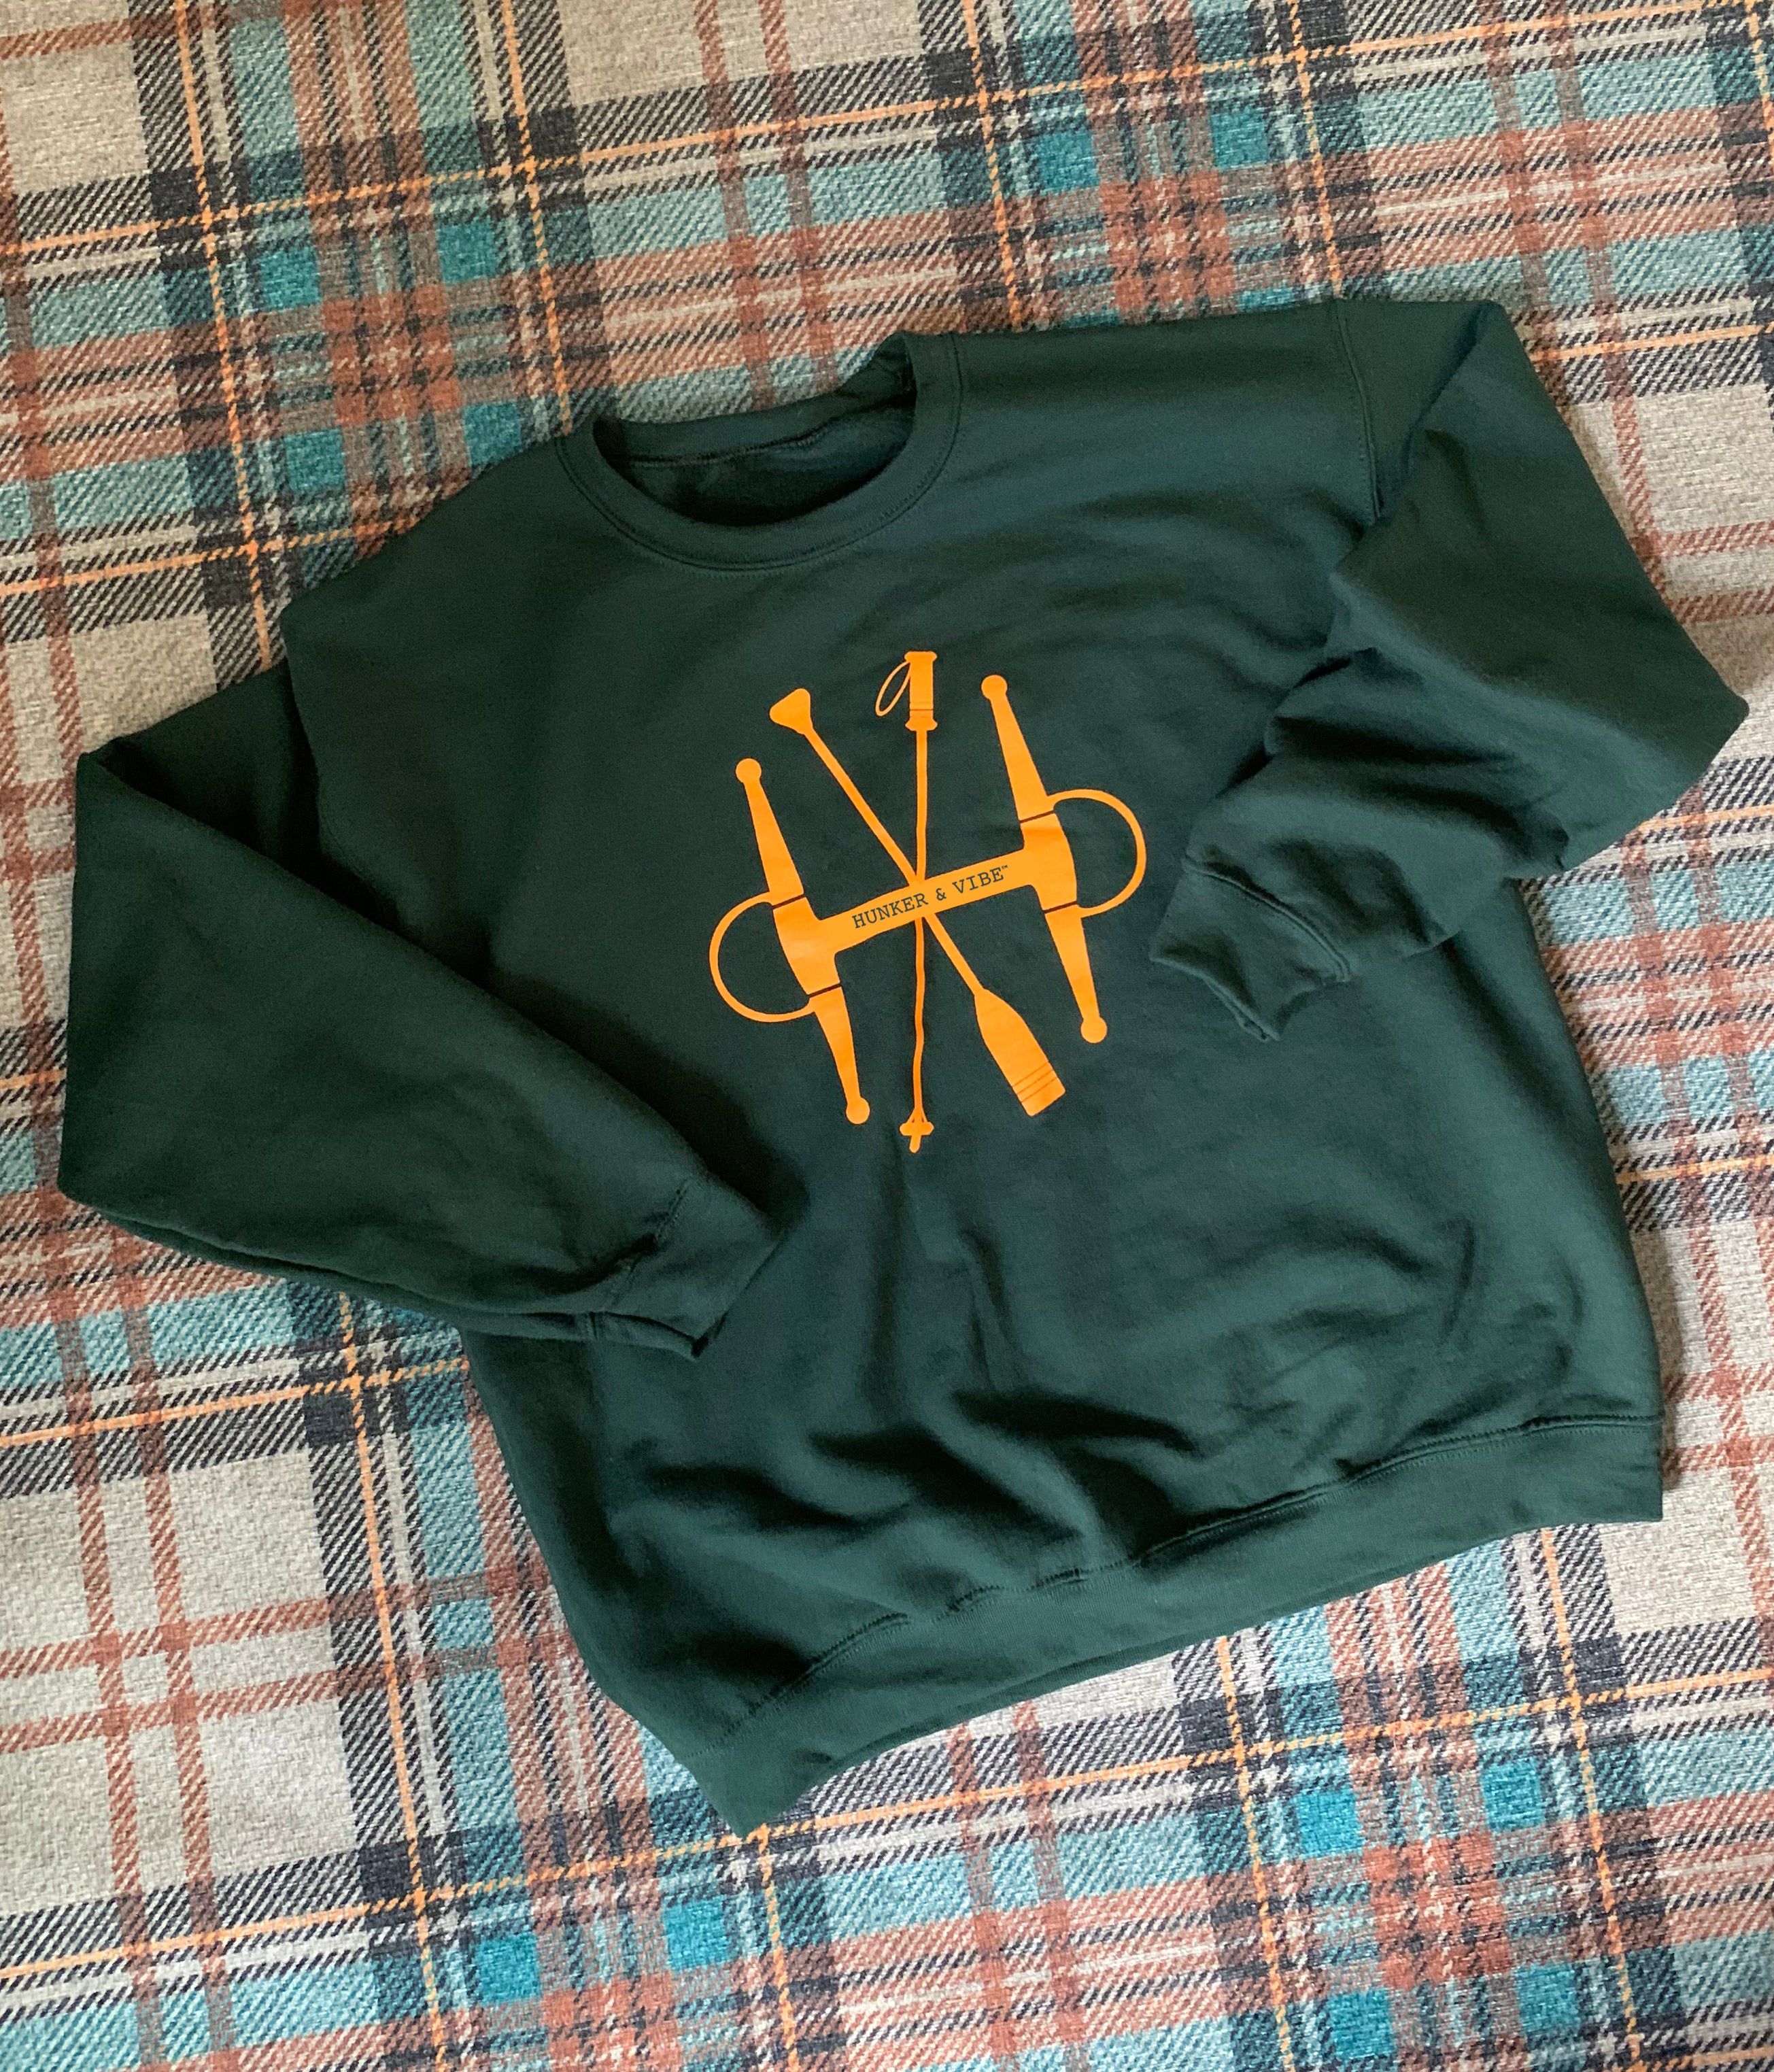 The Hunker & Vibe Ivy League Sweatshirt